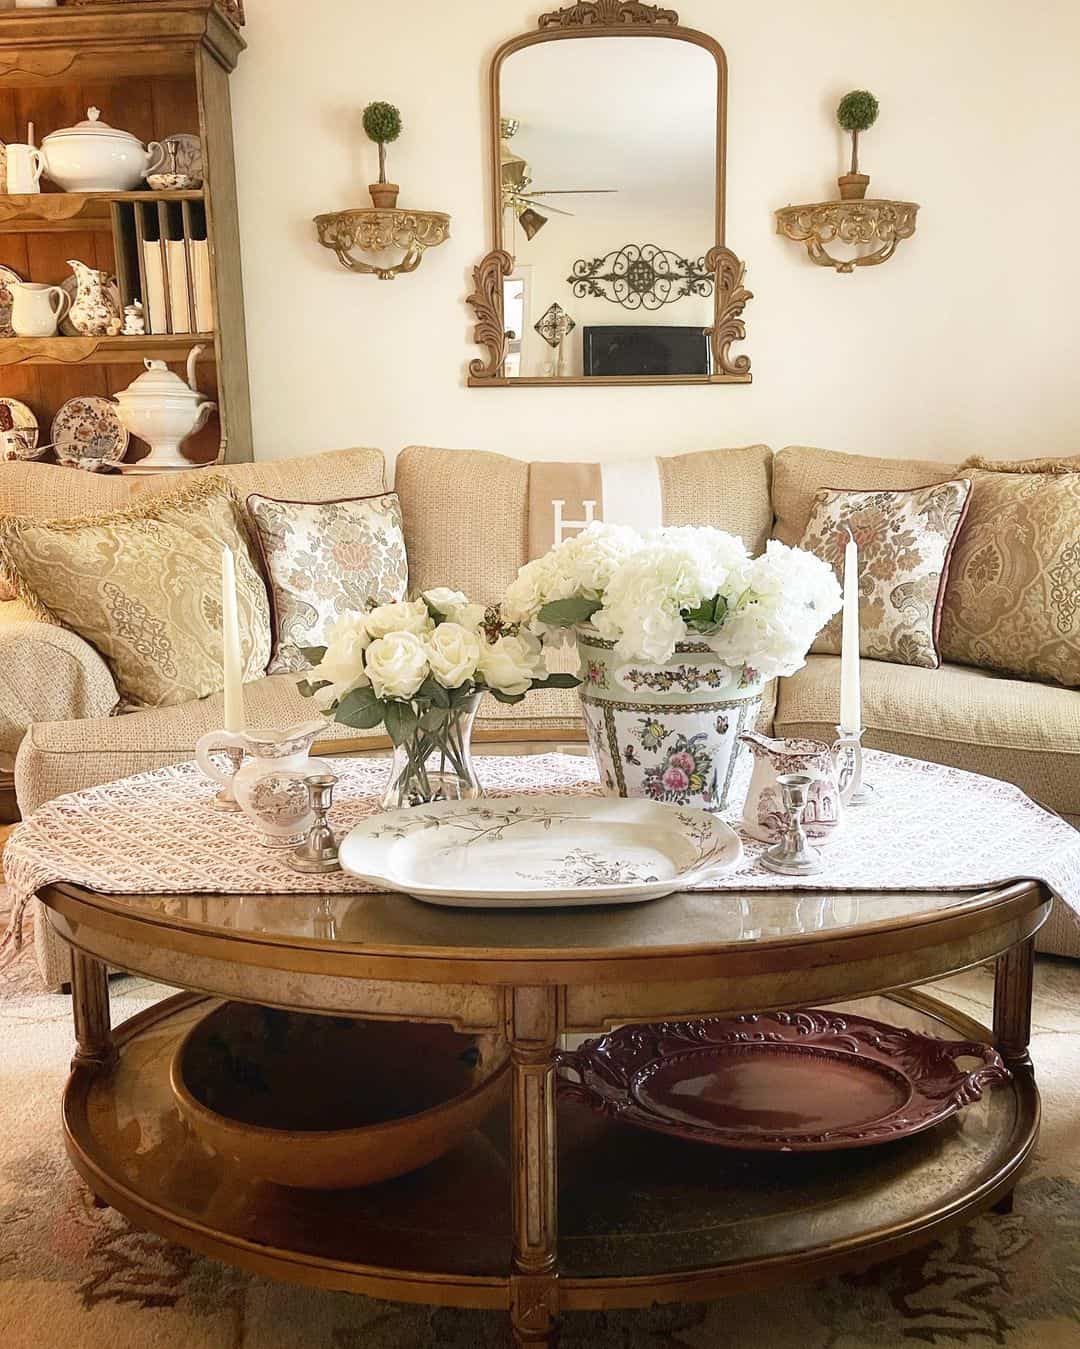 Elegant Decor: Ornate Gold Shelves, Topiaries, and White Hydrangeas